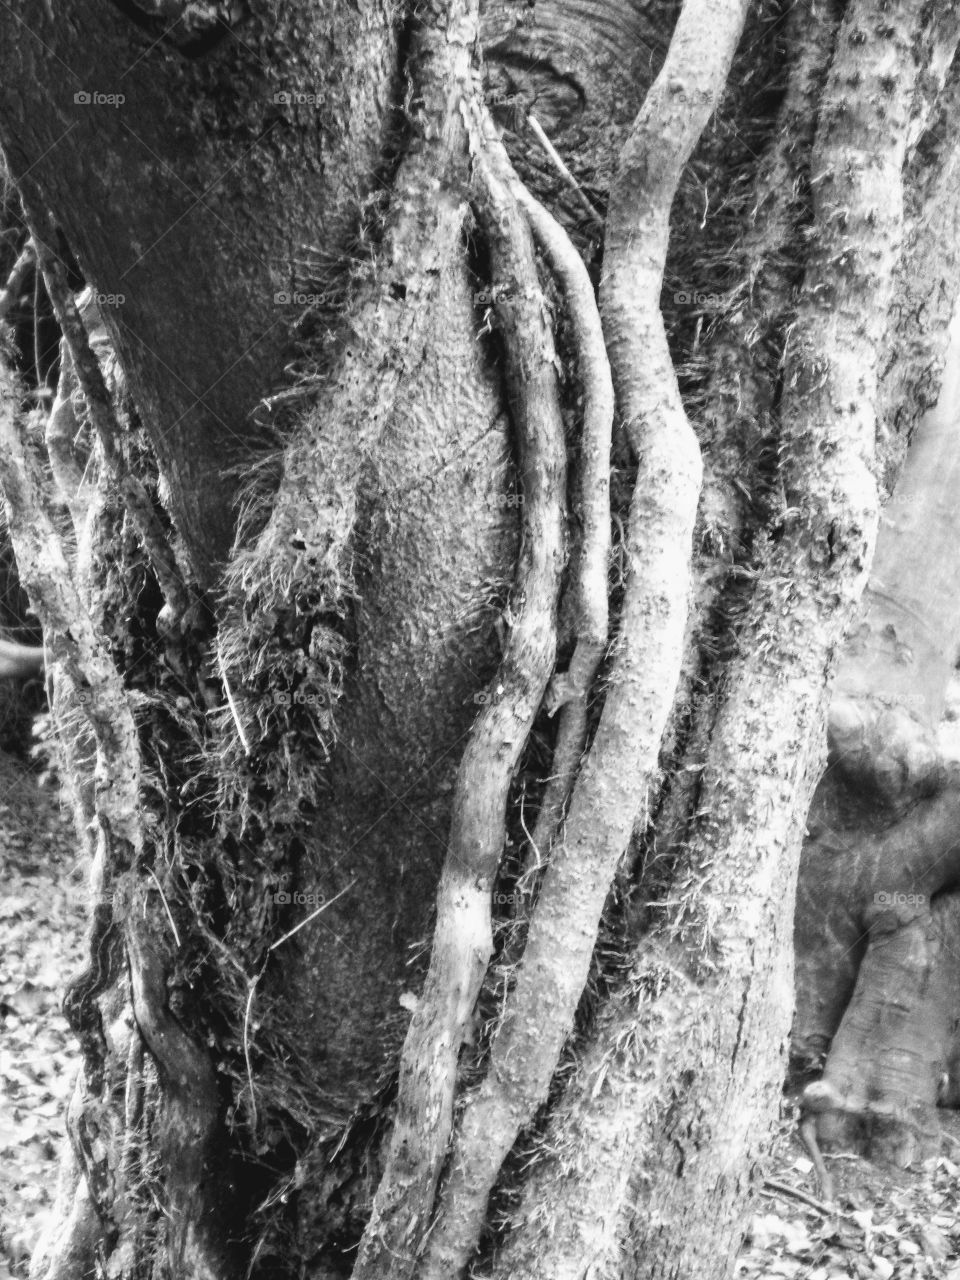 Black and white vines curling around tree